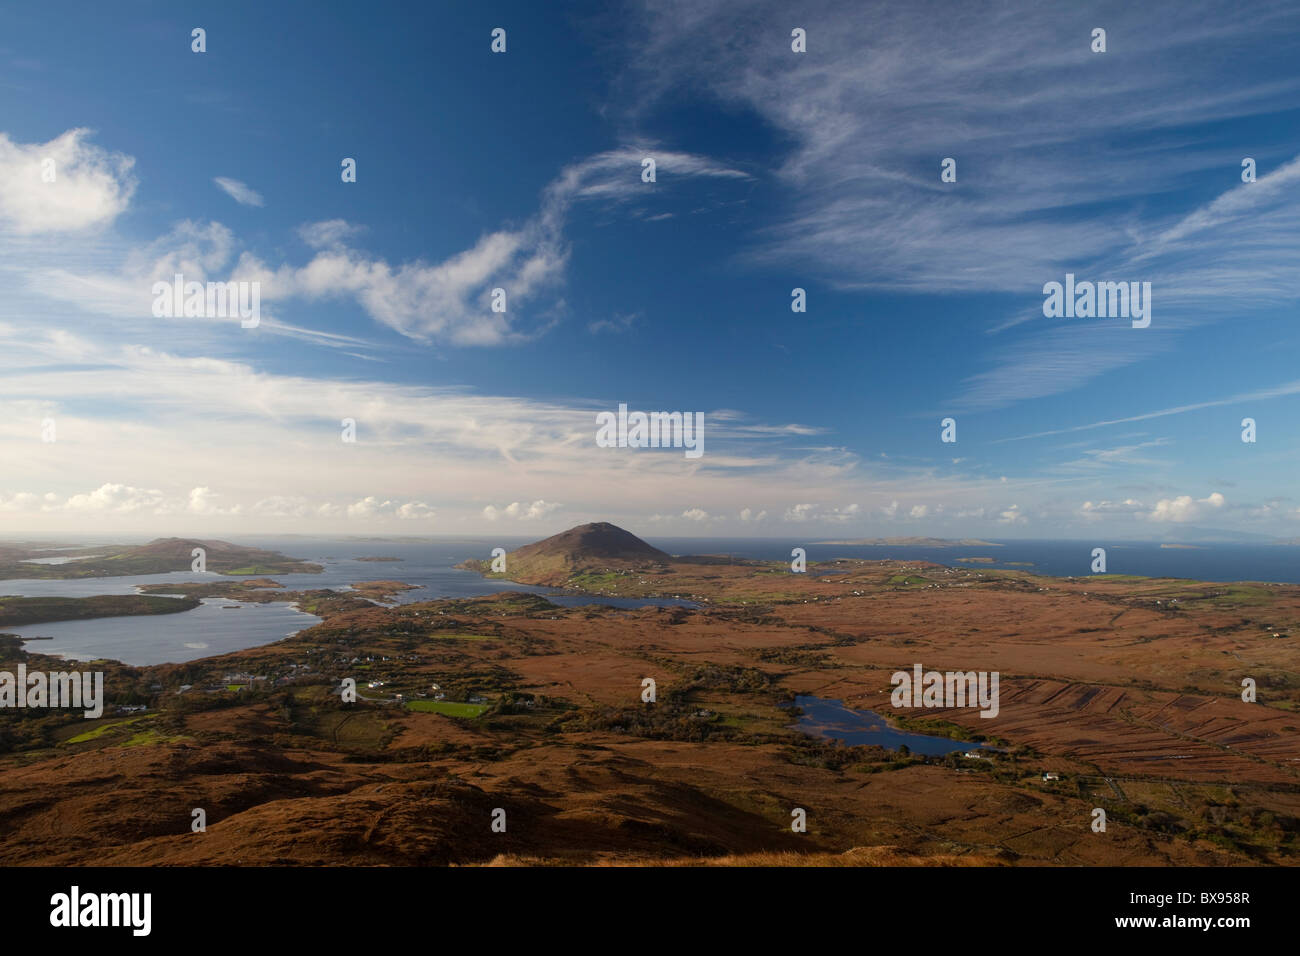 The view of Ballinakill Bay and the Connemara coast, including Tully Mountain, seen from Diamond Hill, Connemara Stock Photo